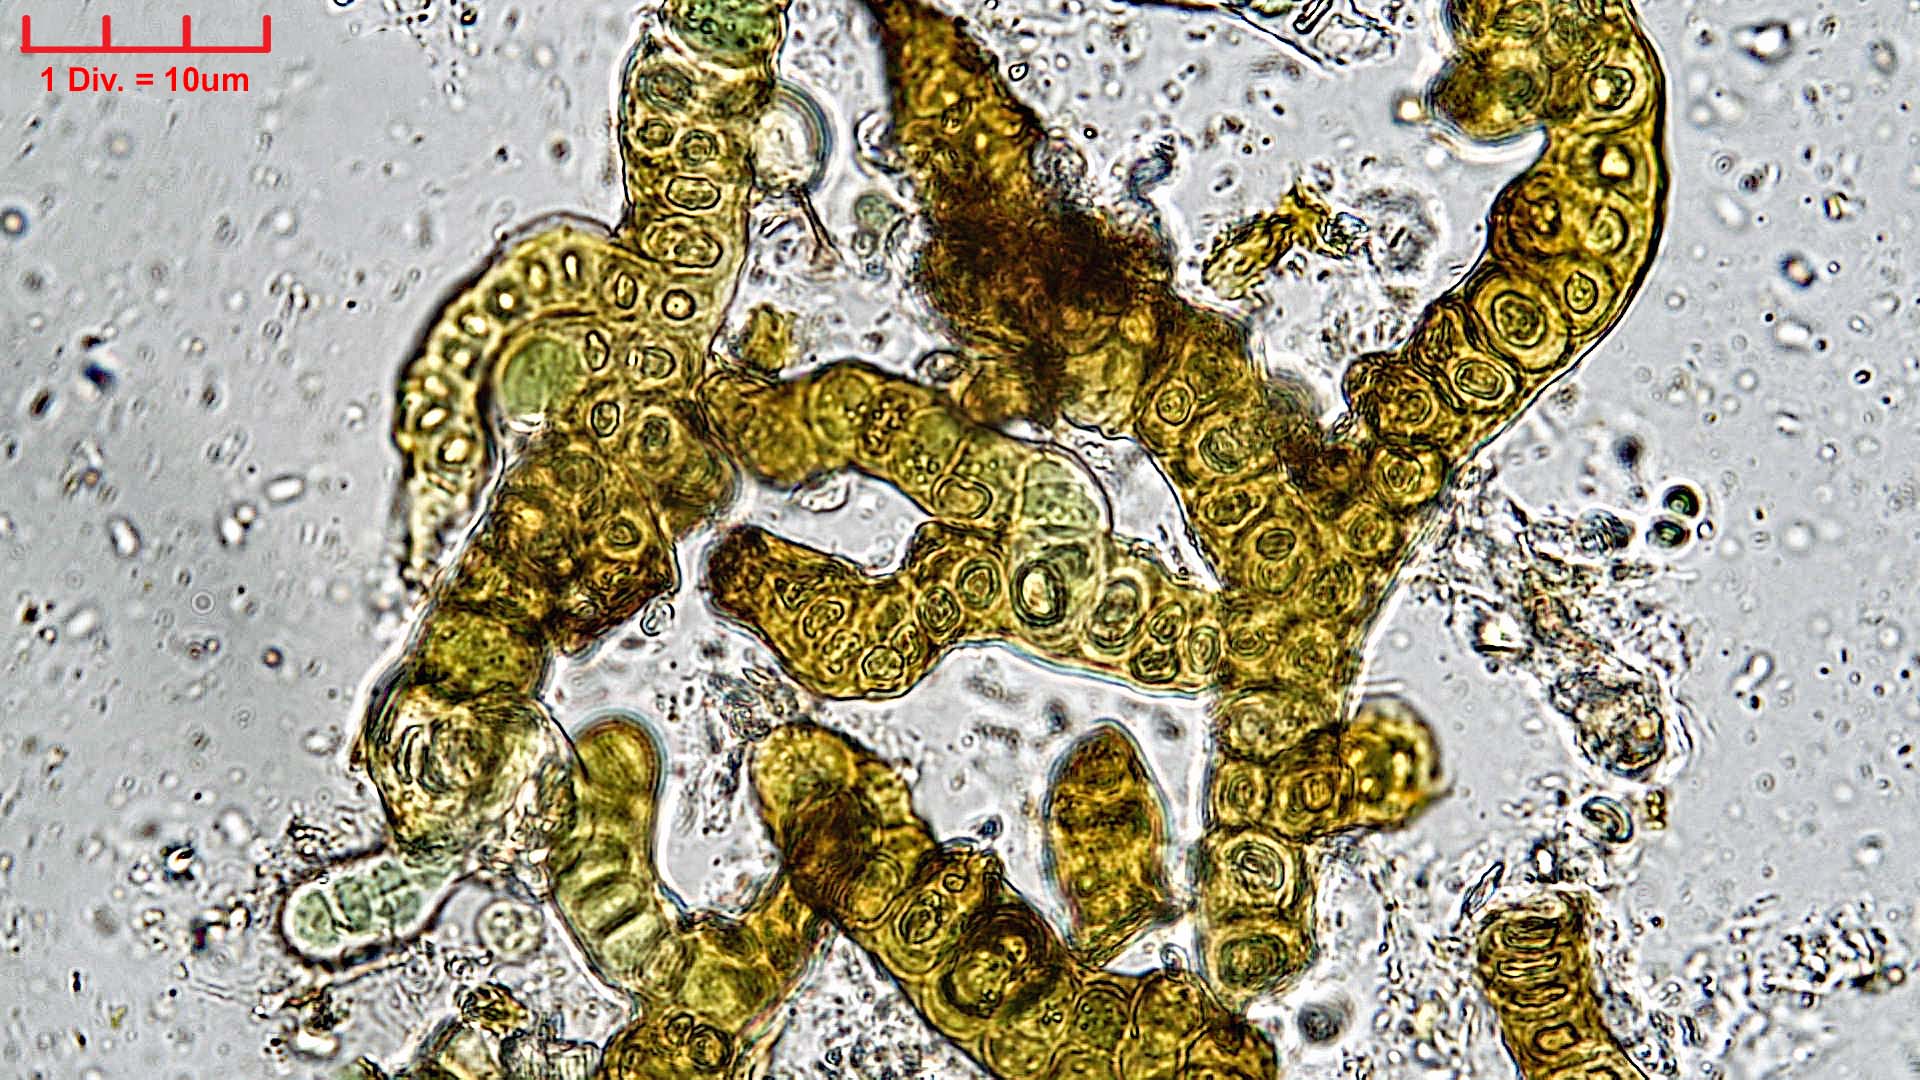 Cyanobacteria/Nostocales/Stigonemataceae/Stigonema/minutum/stigonema-minutum-534.jpg